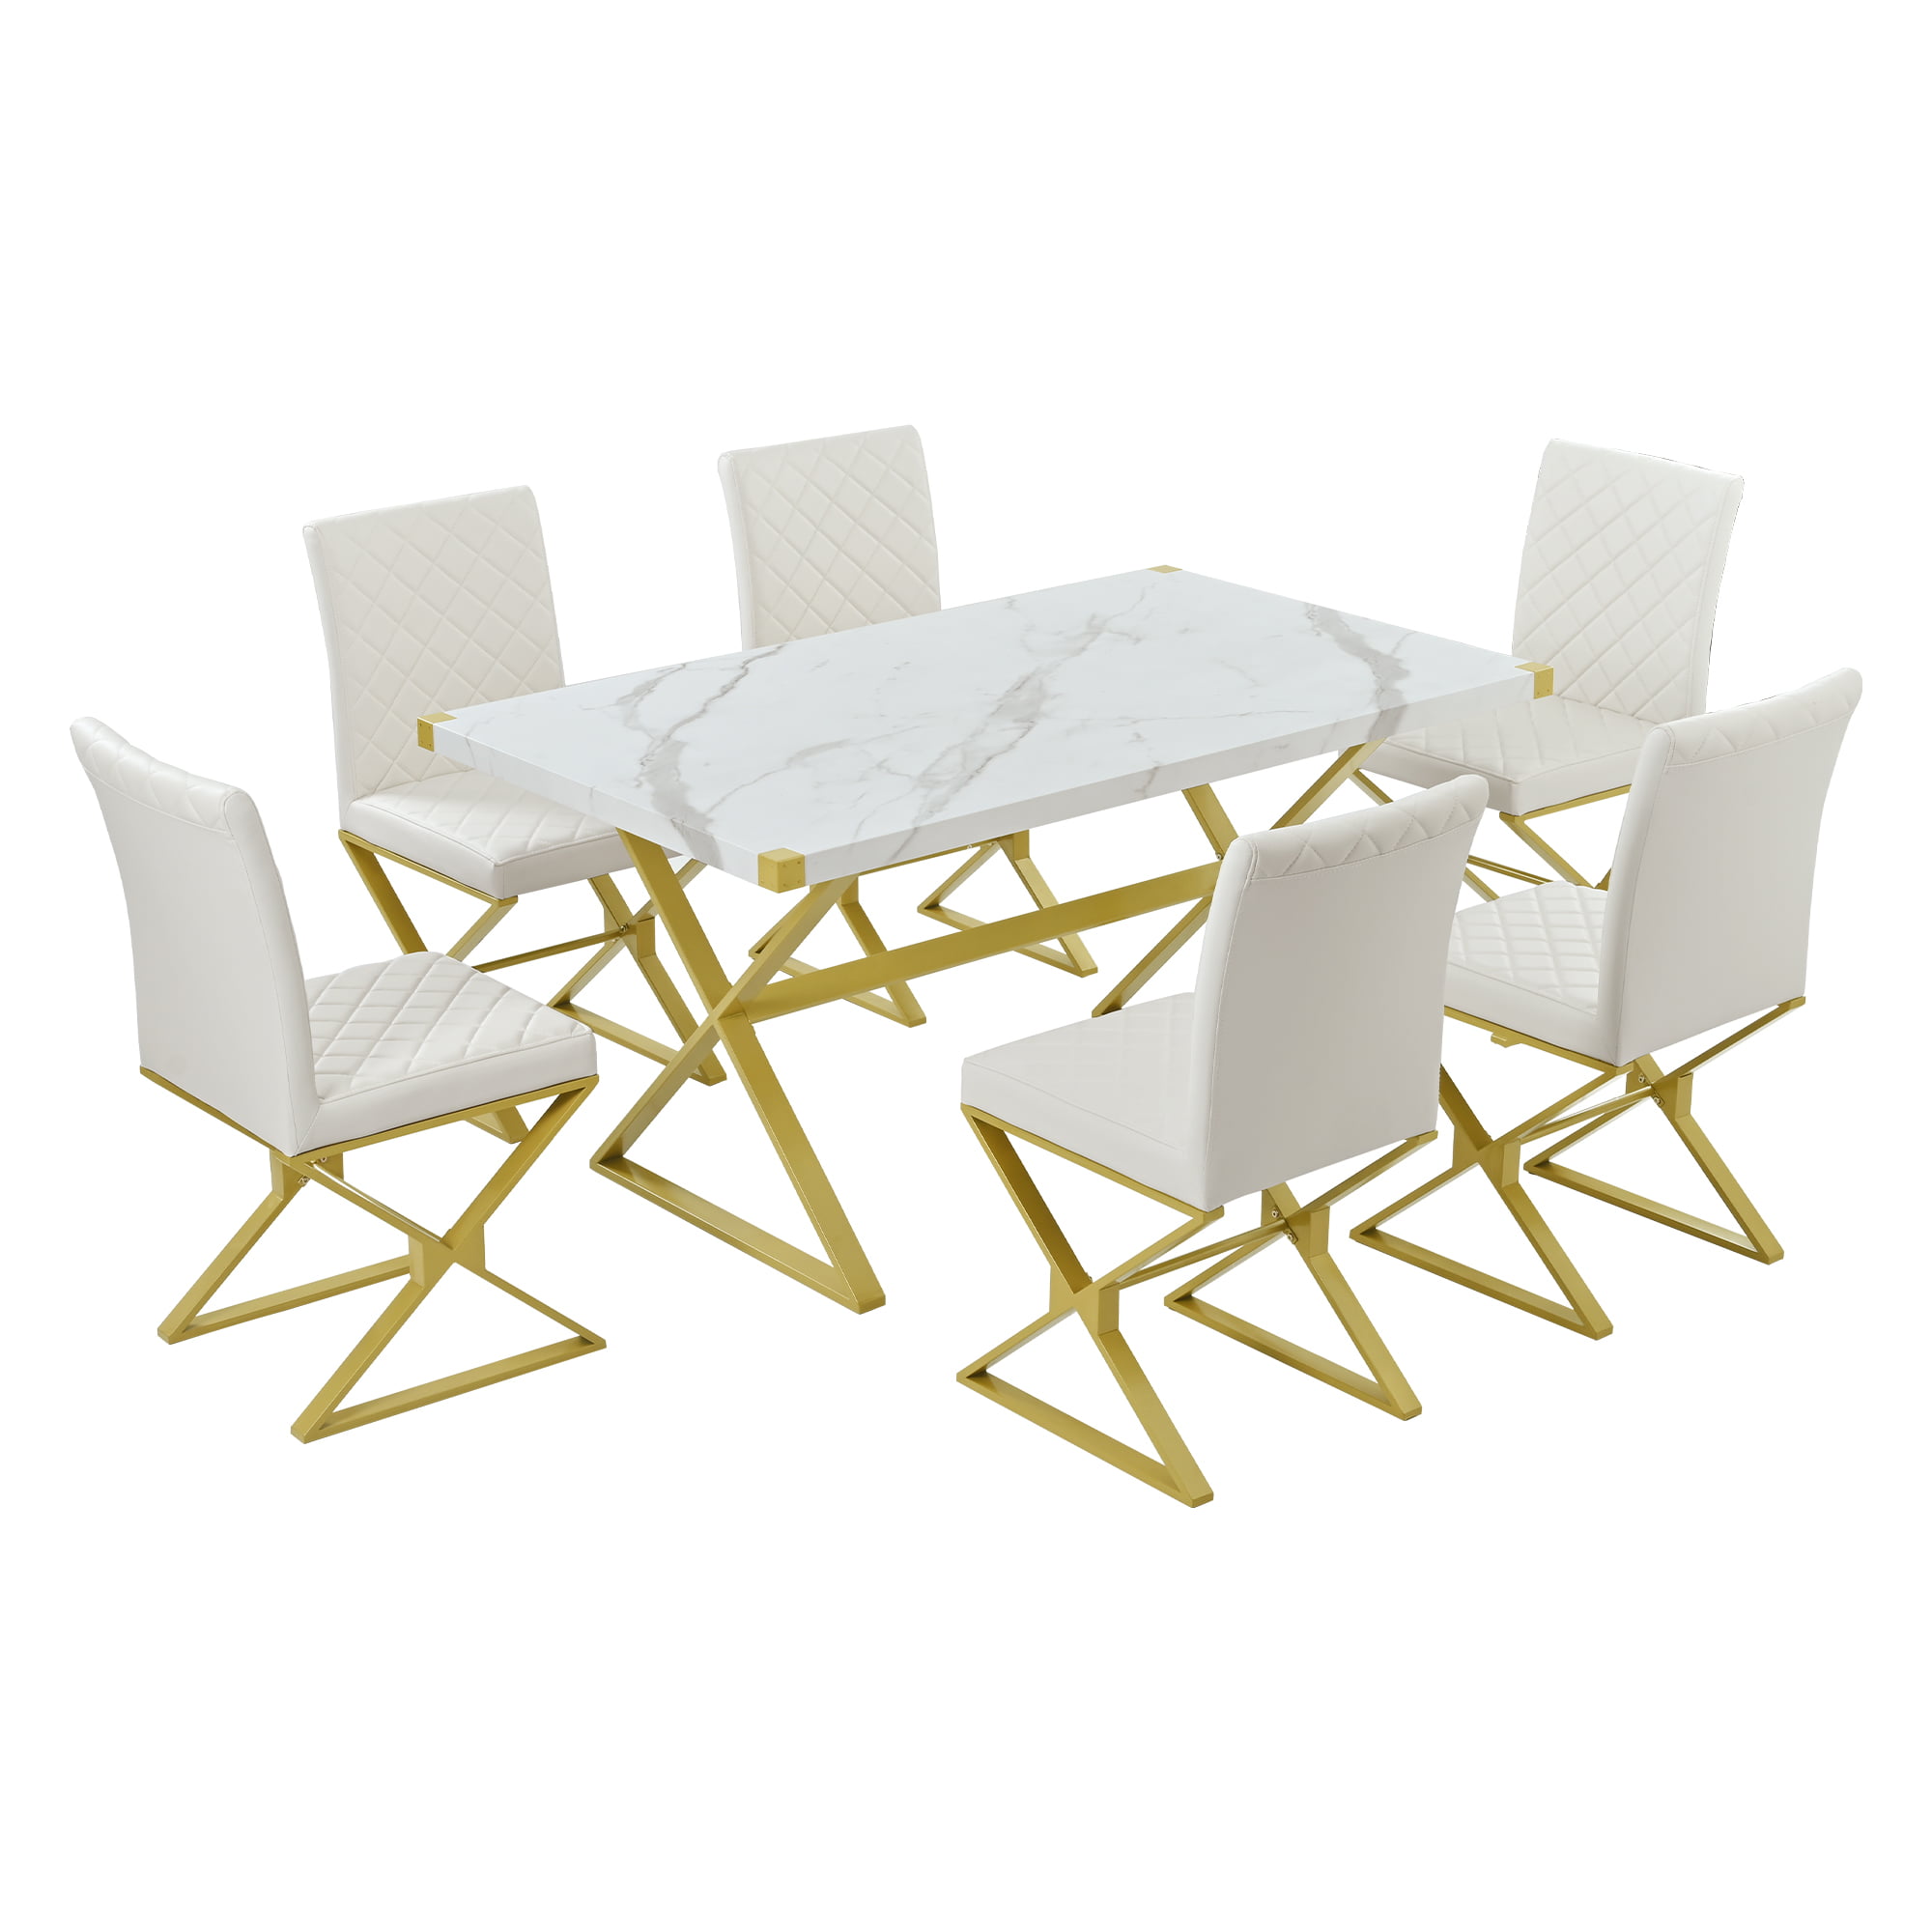 7-Piece Modern Dining Table Set - ST000027AAK